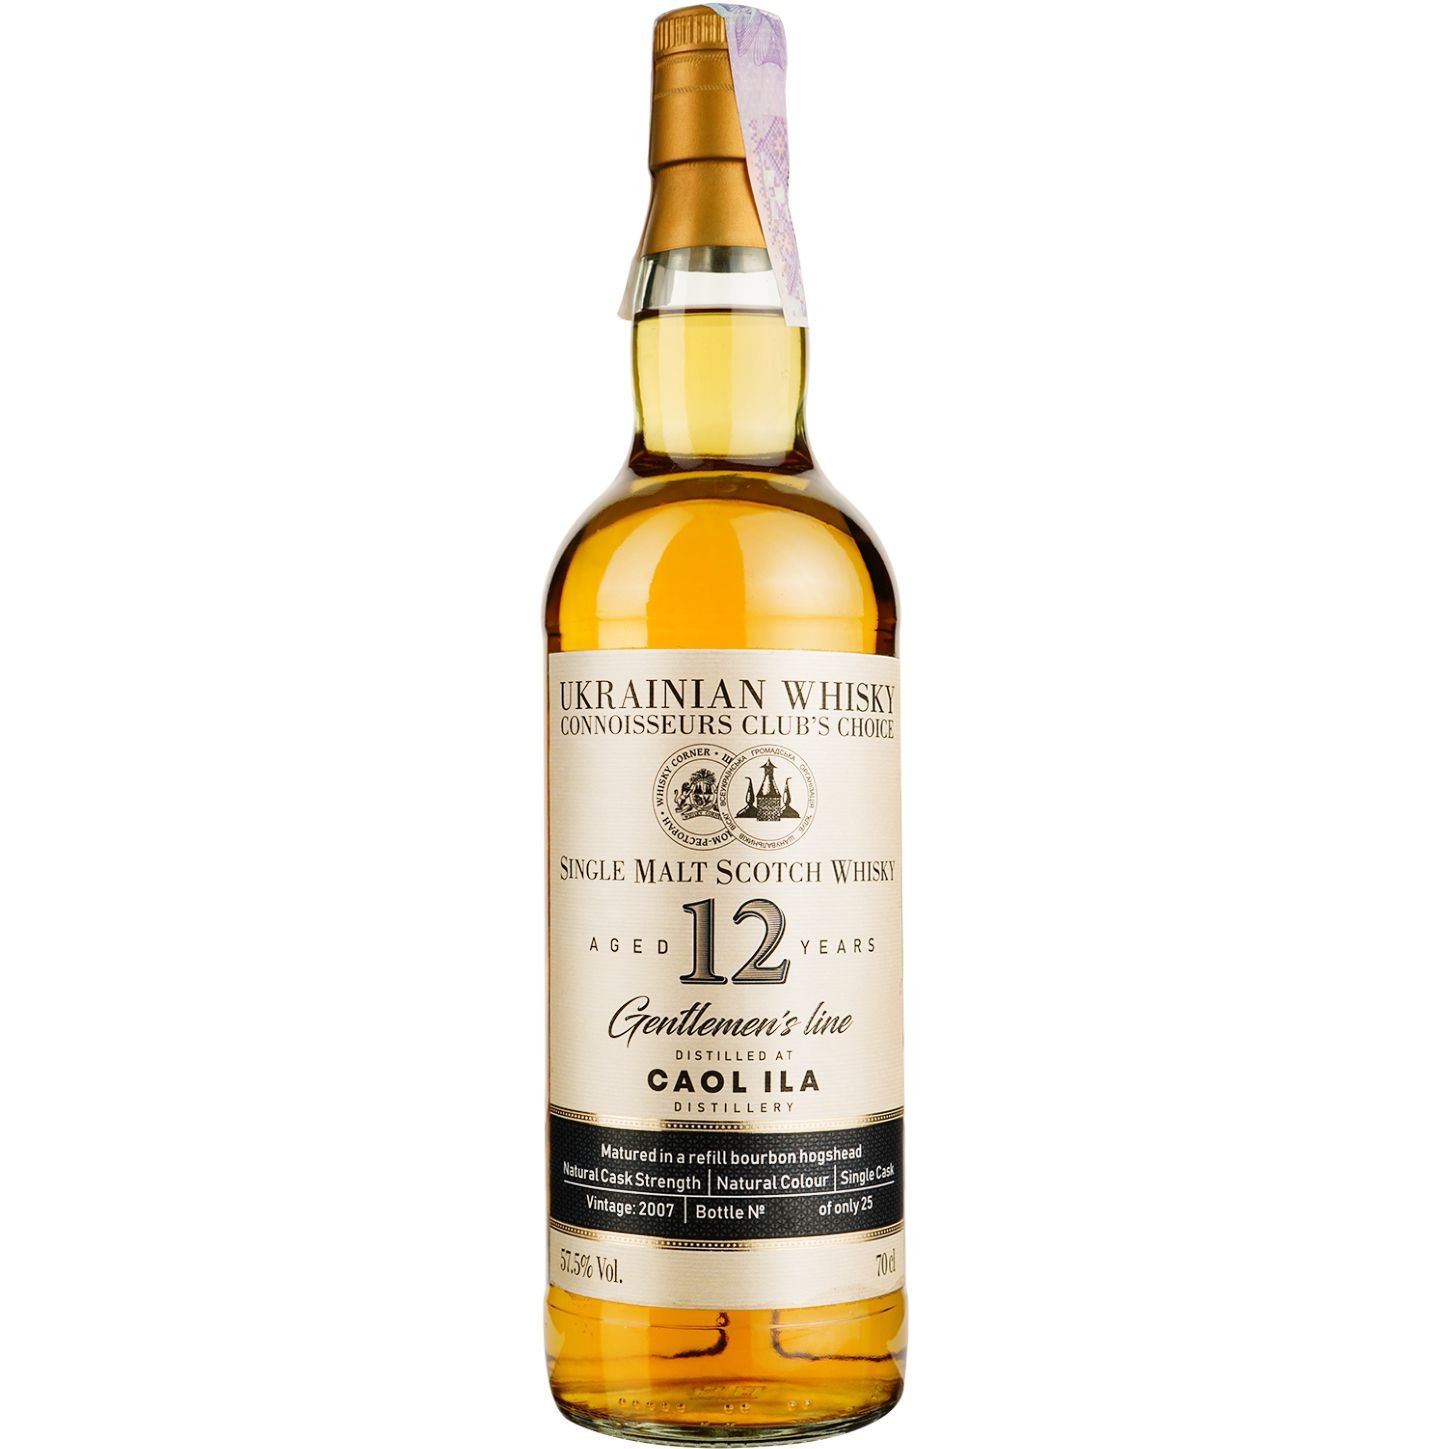 Виски Caol Ila 12 Years Old Single Malt Scotch Whisky, в подарочной упаковке, 57,5%, 0,7 л - фото 2